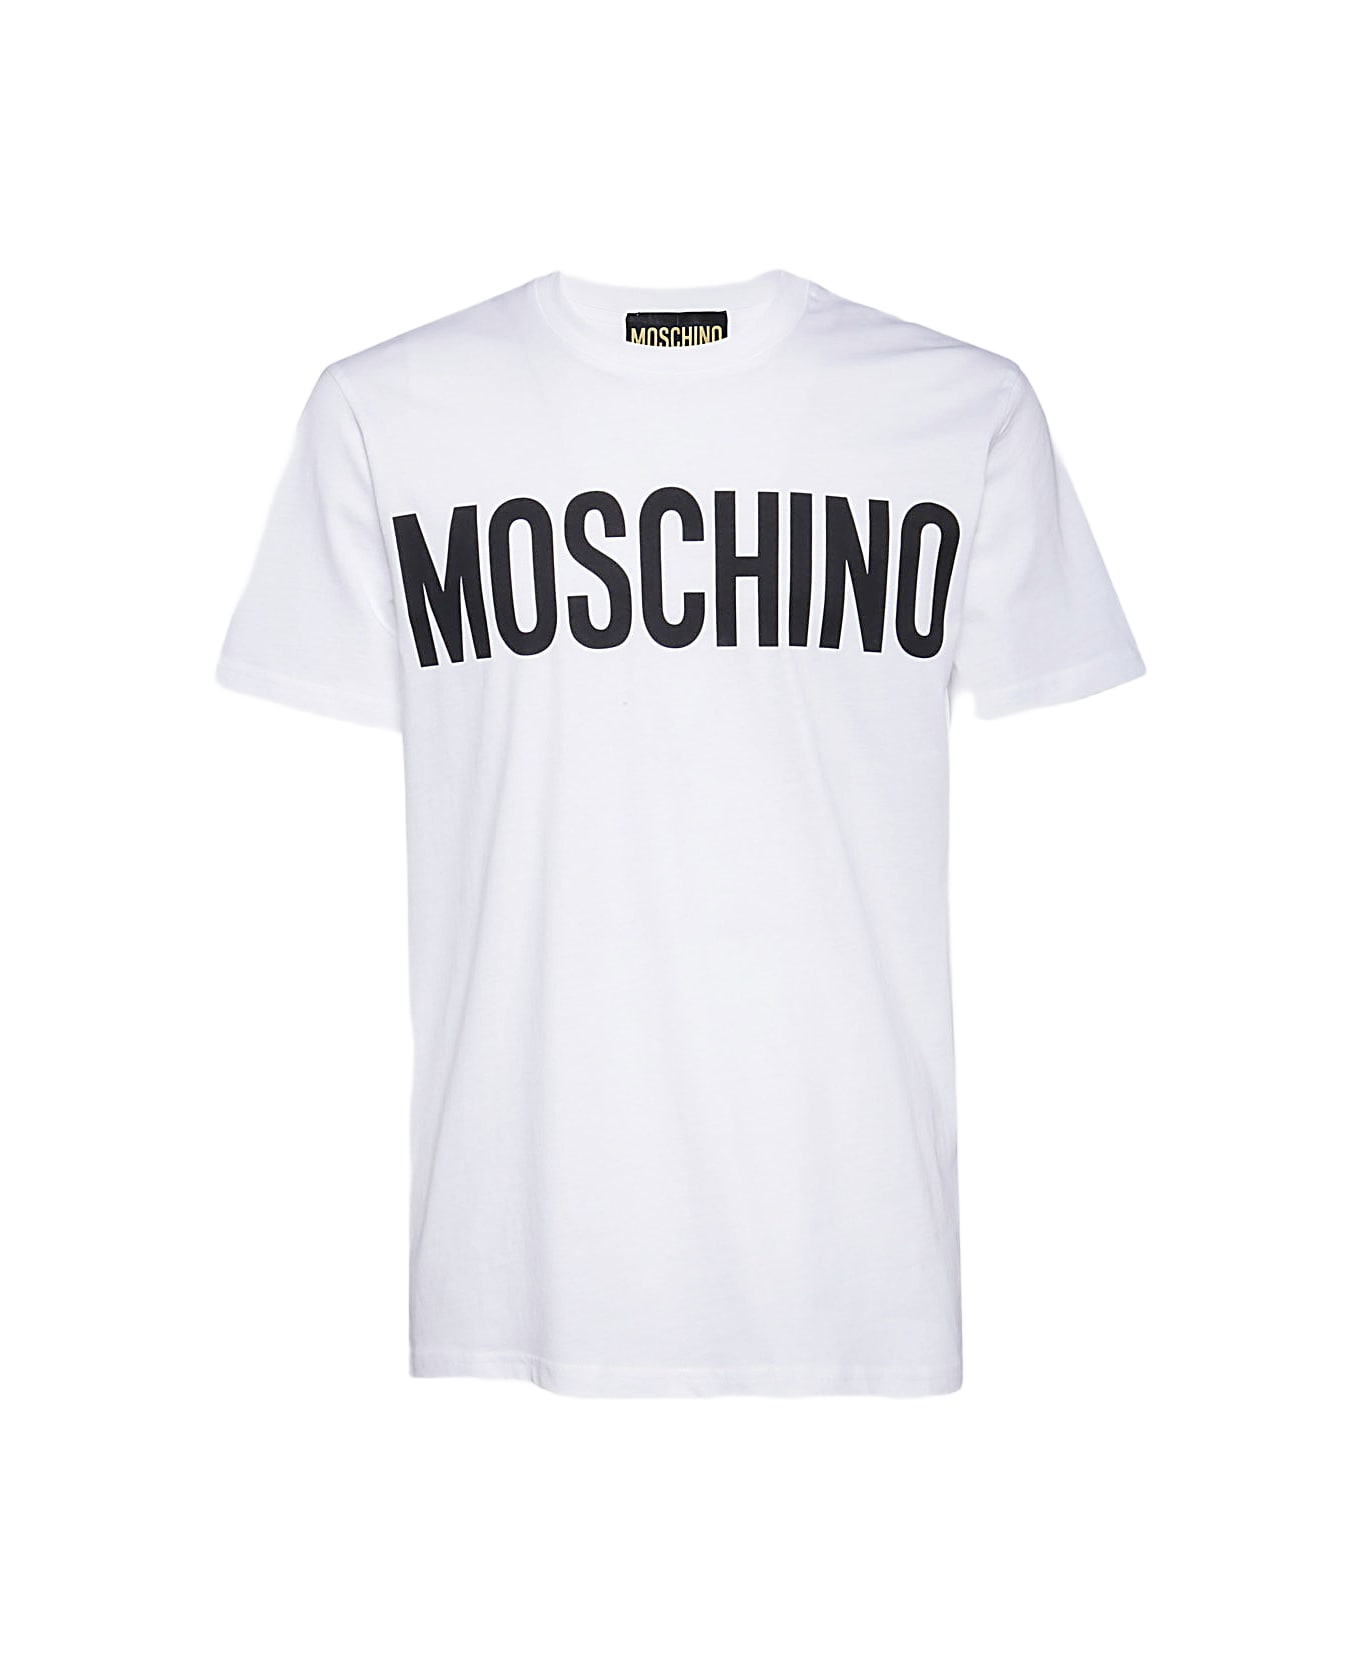 Moschino White Cotton T-shirt - White